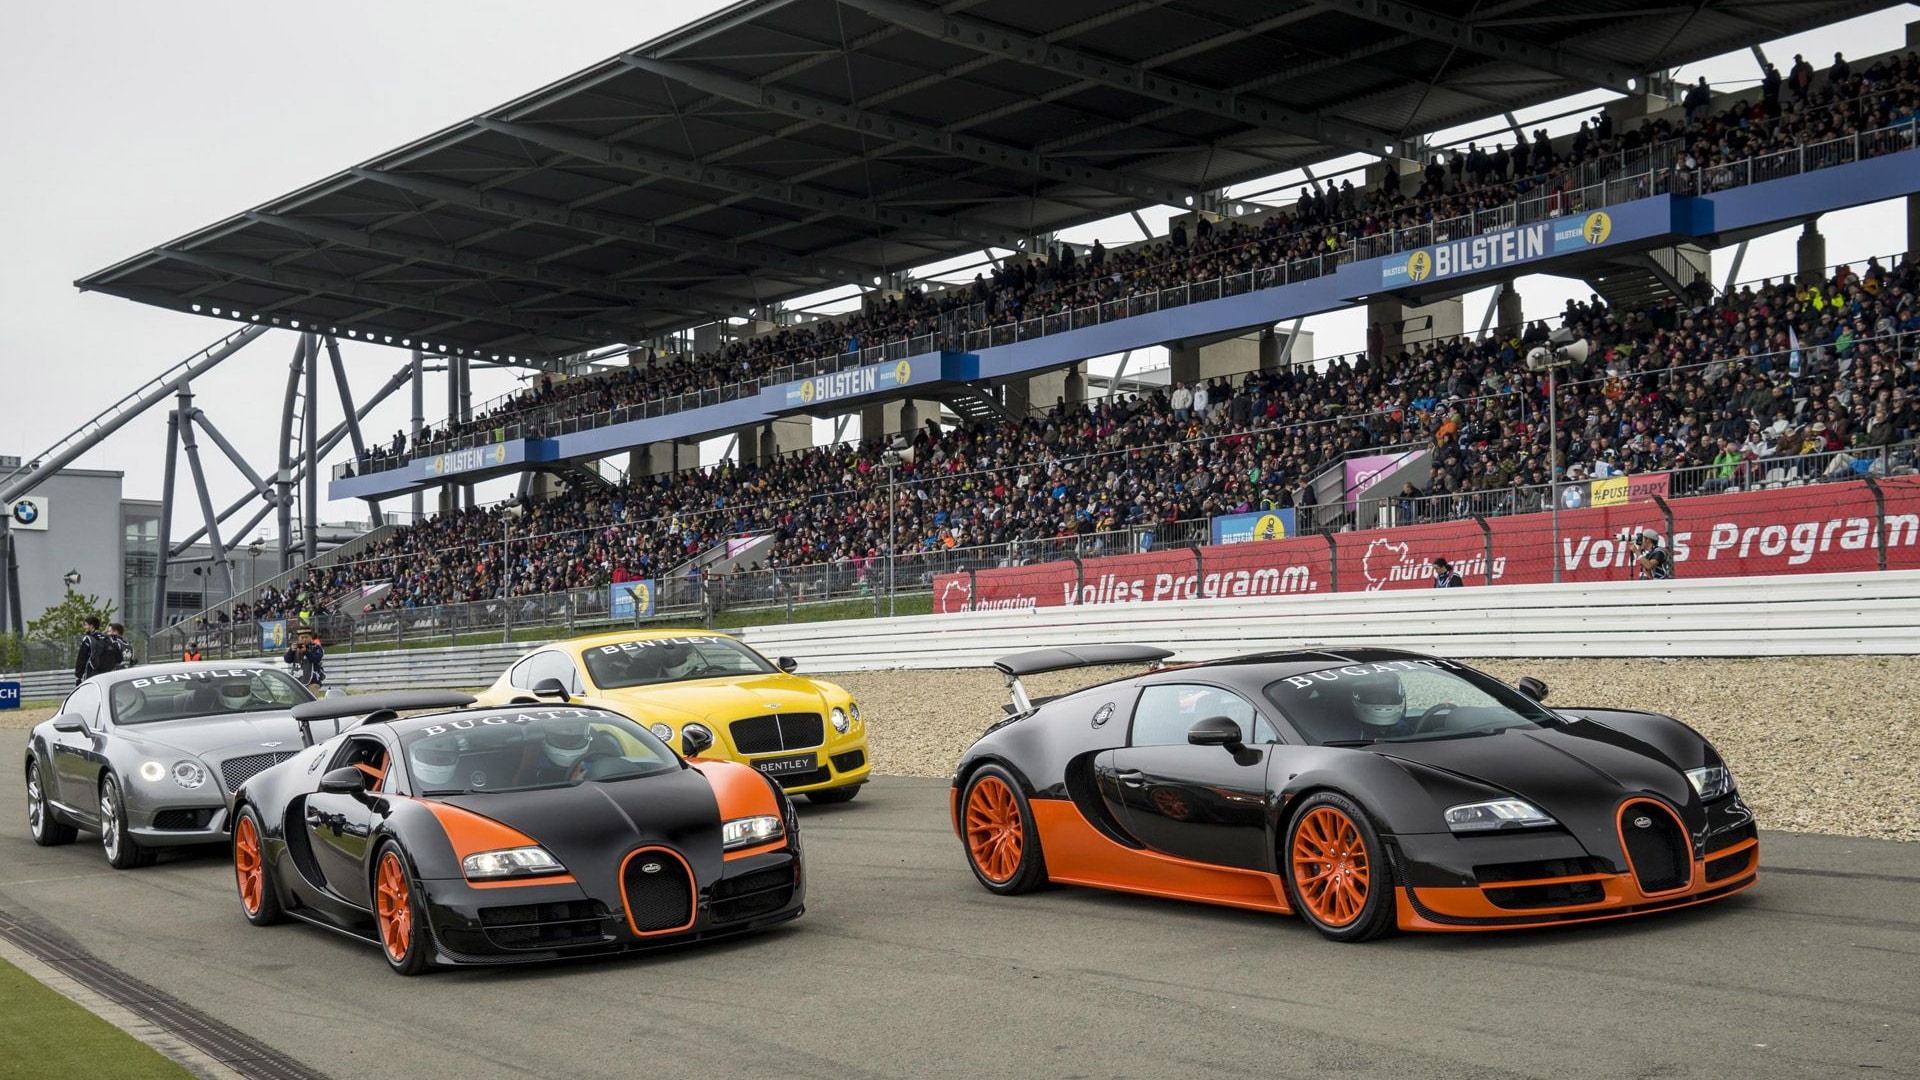 Bugatti Veyron Super Sport and Veyron Grand Sport Vitesse land speed record holders